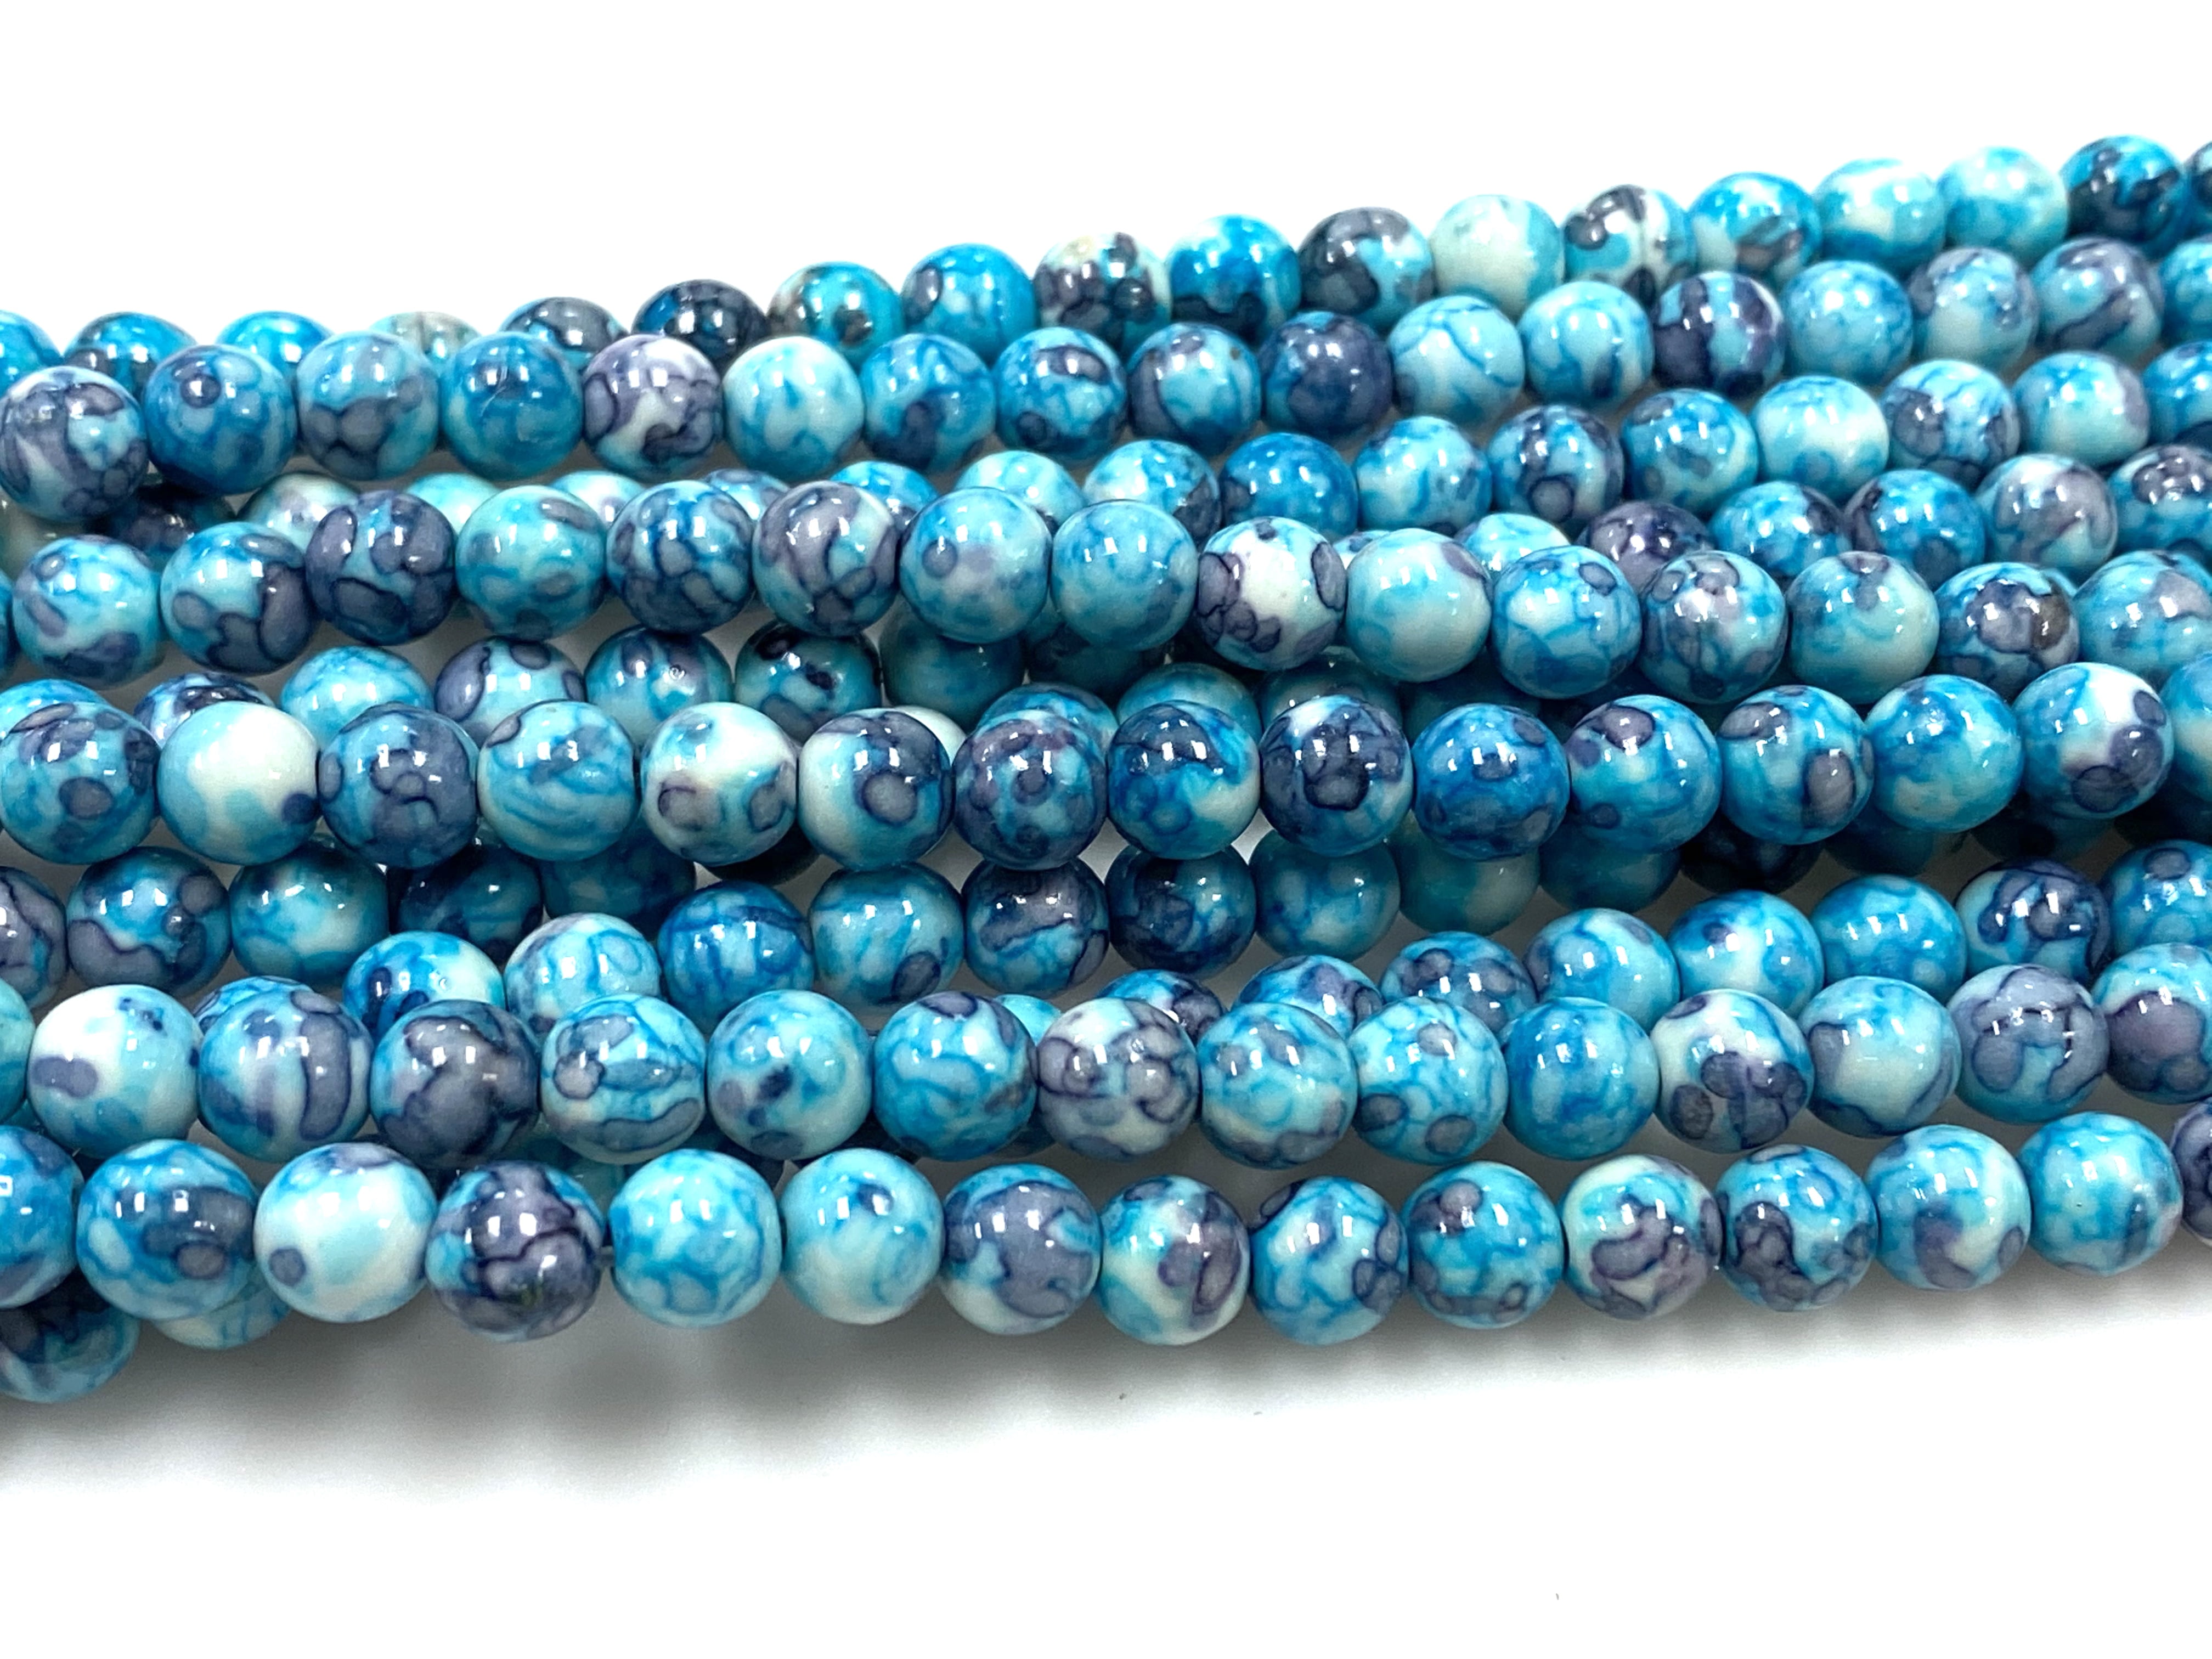 Natural Blue Rain Jasper Beads / Healing Energy Stone Beads / Faceted Round  Shape Beads / 6mm 2 Strand Gemstone Beads For DIY Jewelry Making 